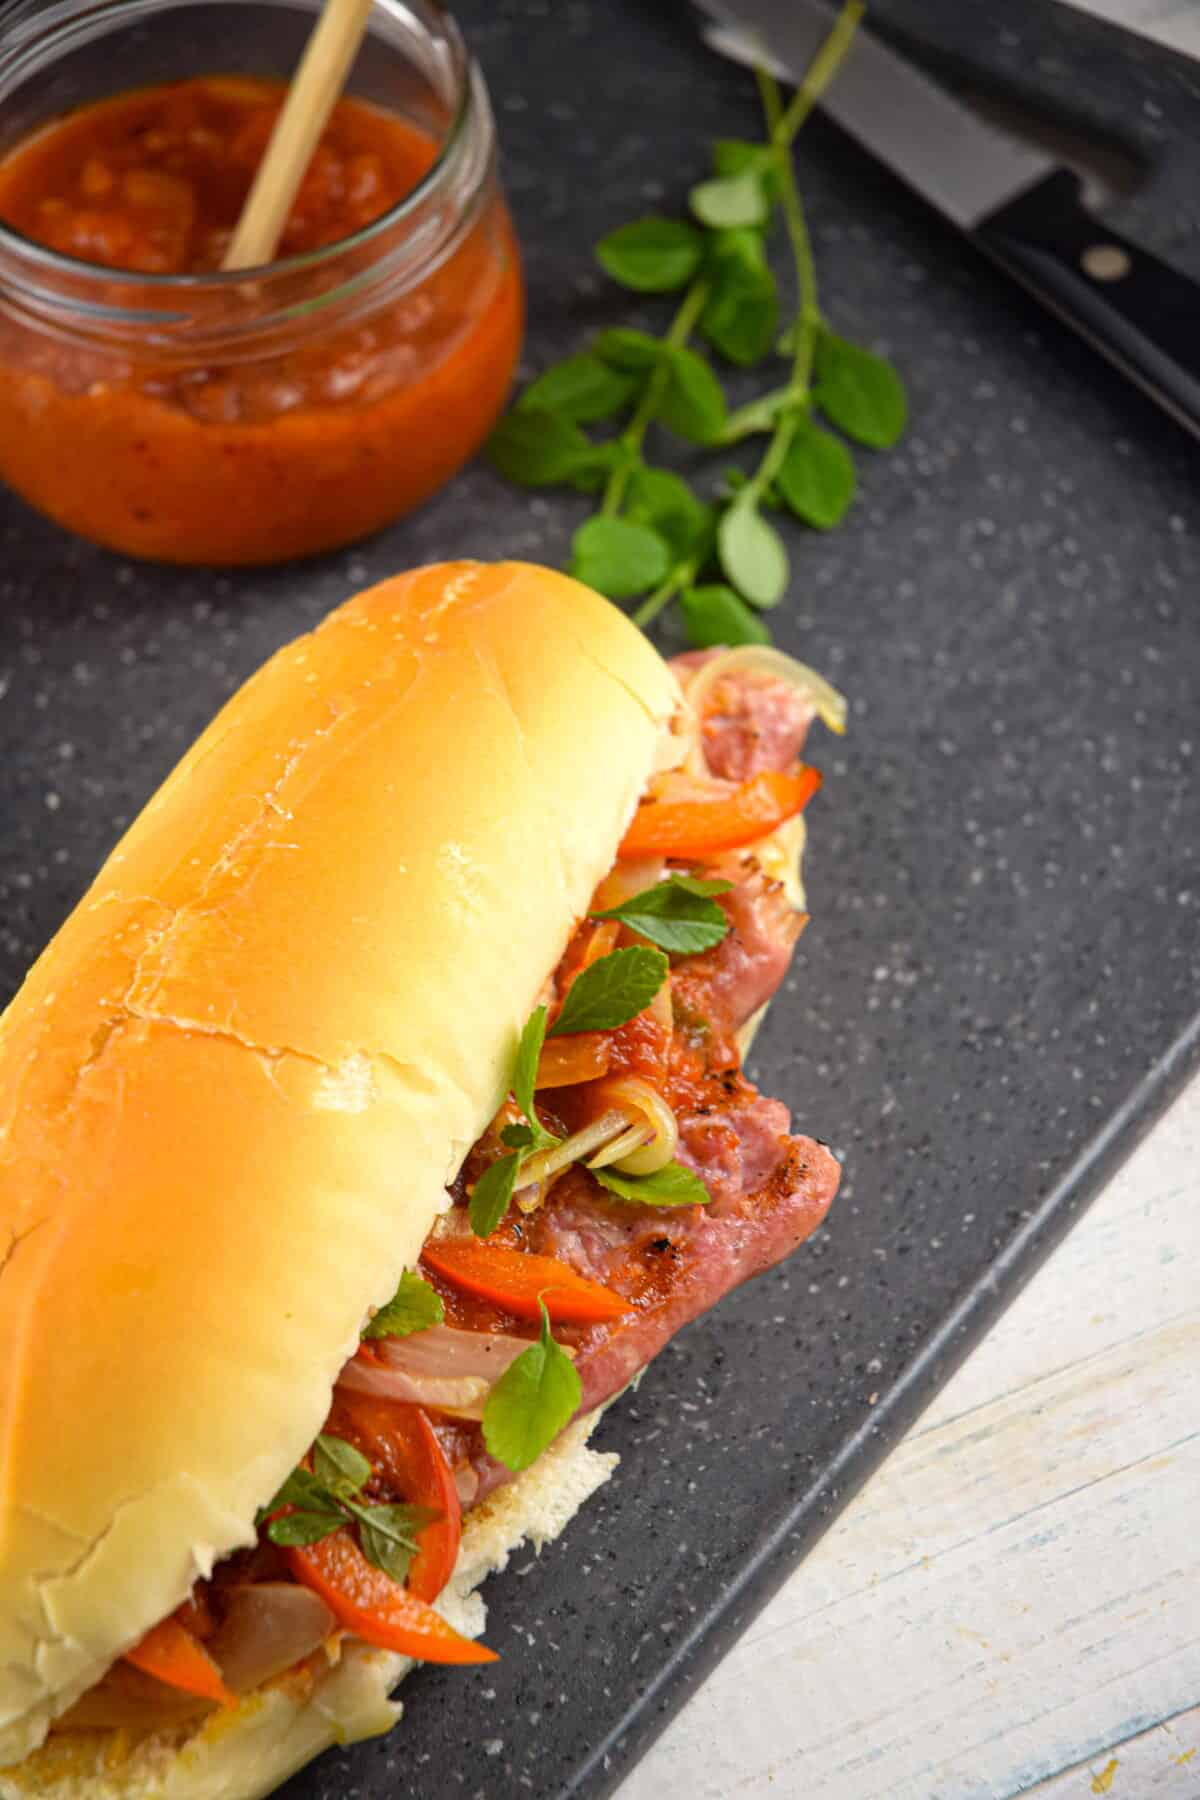 Italian sausage sandwich with fresh oregano and a jar of pepper sauce on dark cutting grey board.